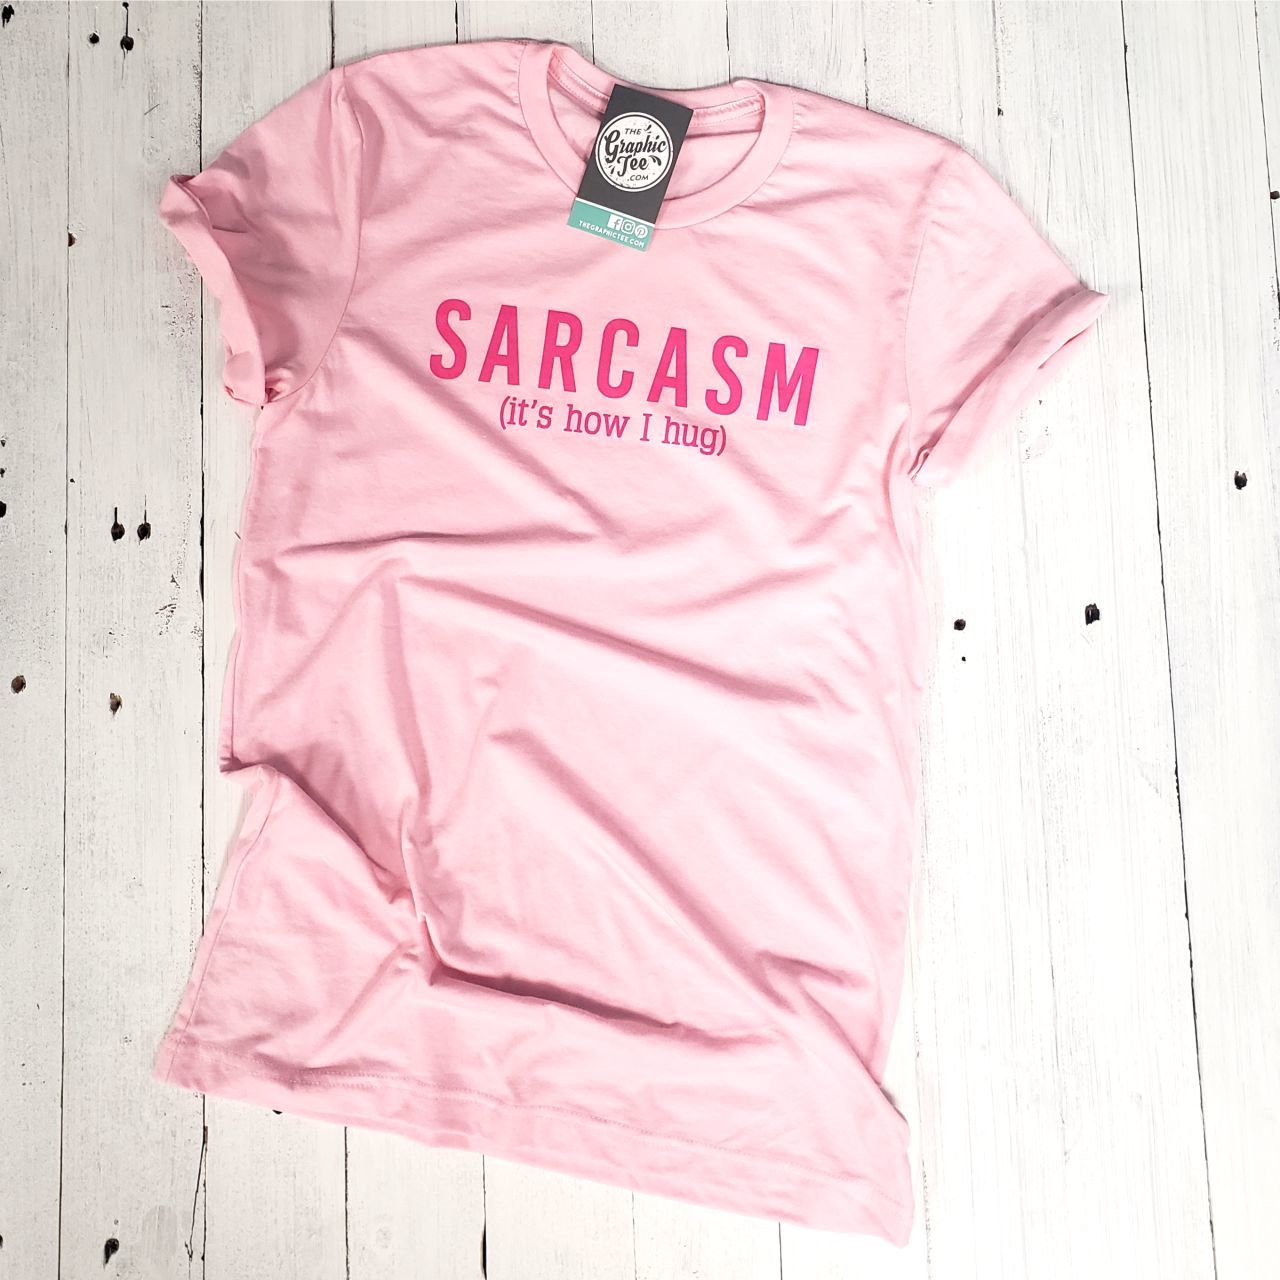 Sarcasm (It's How I Hug) - Unisex Tee - The Graphic Tee